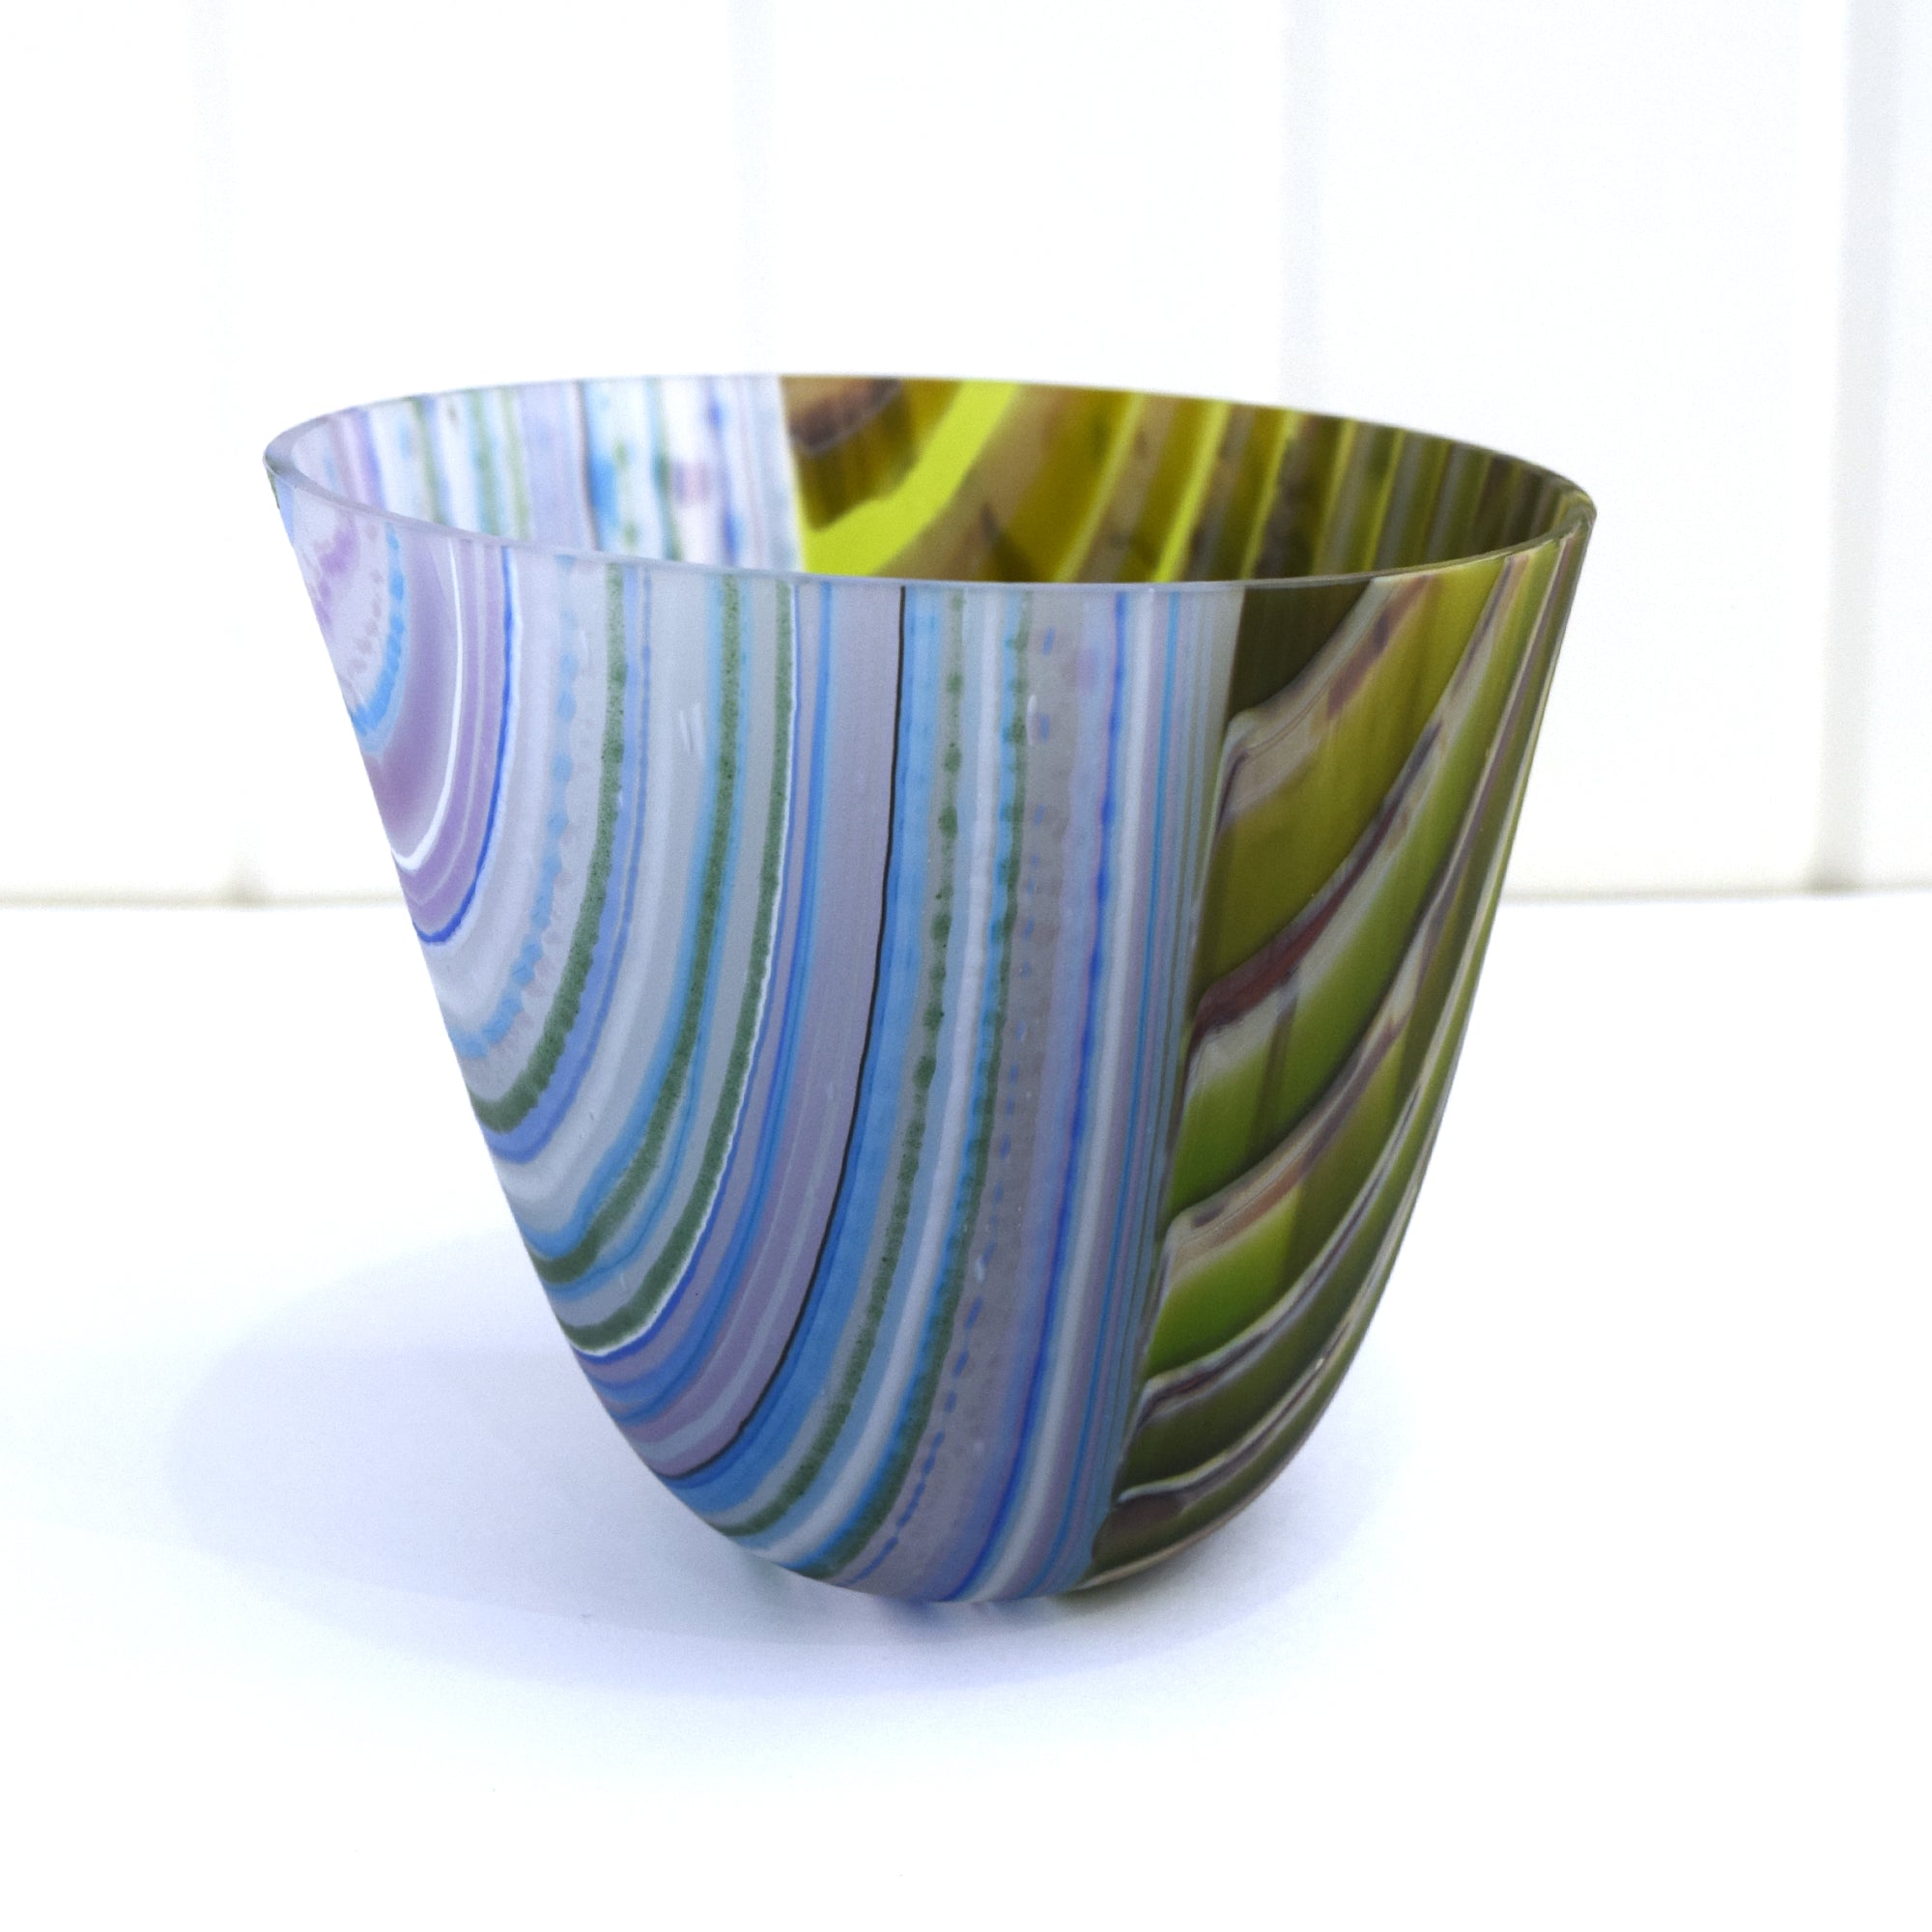 Greg Ash -  'Louvre' Medium Green and Blue Half Stringer Vase (gas001)